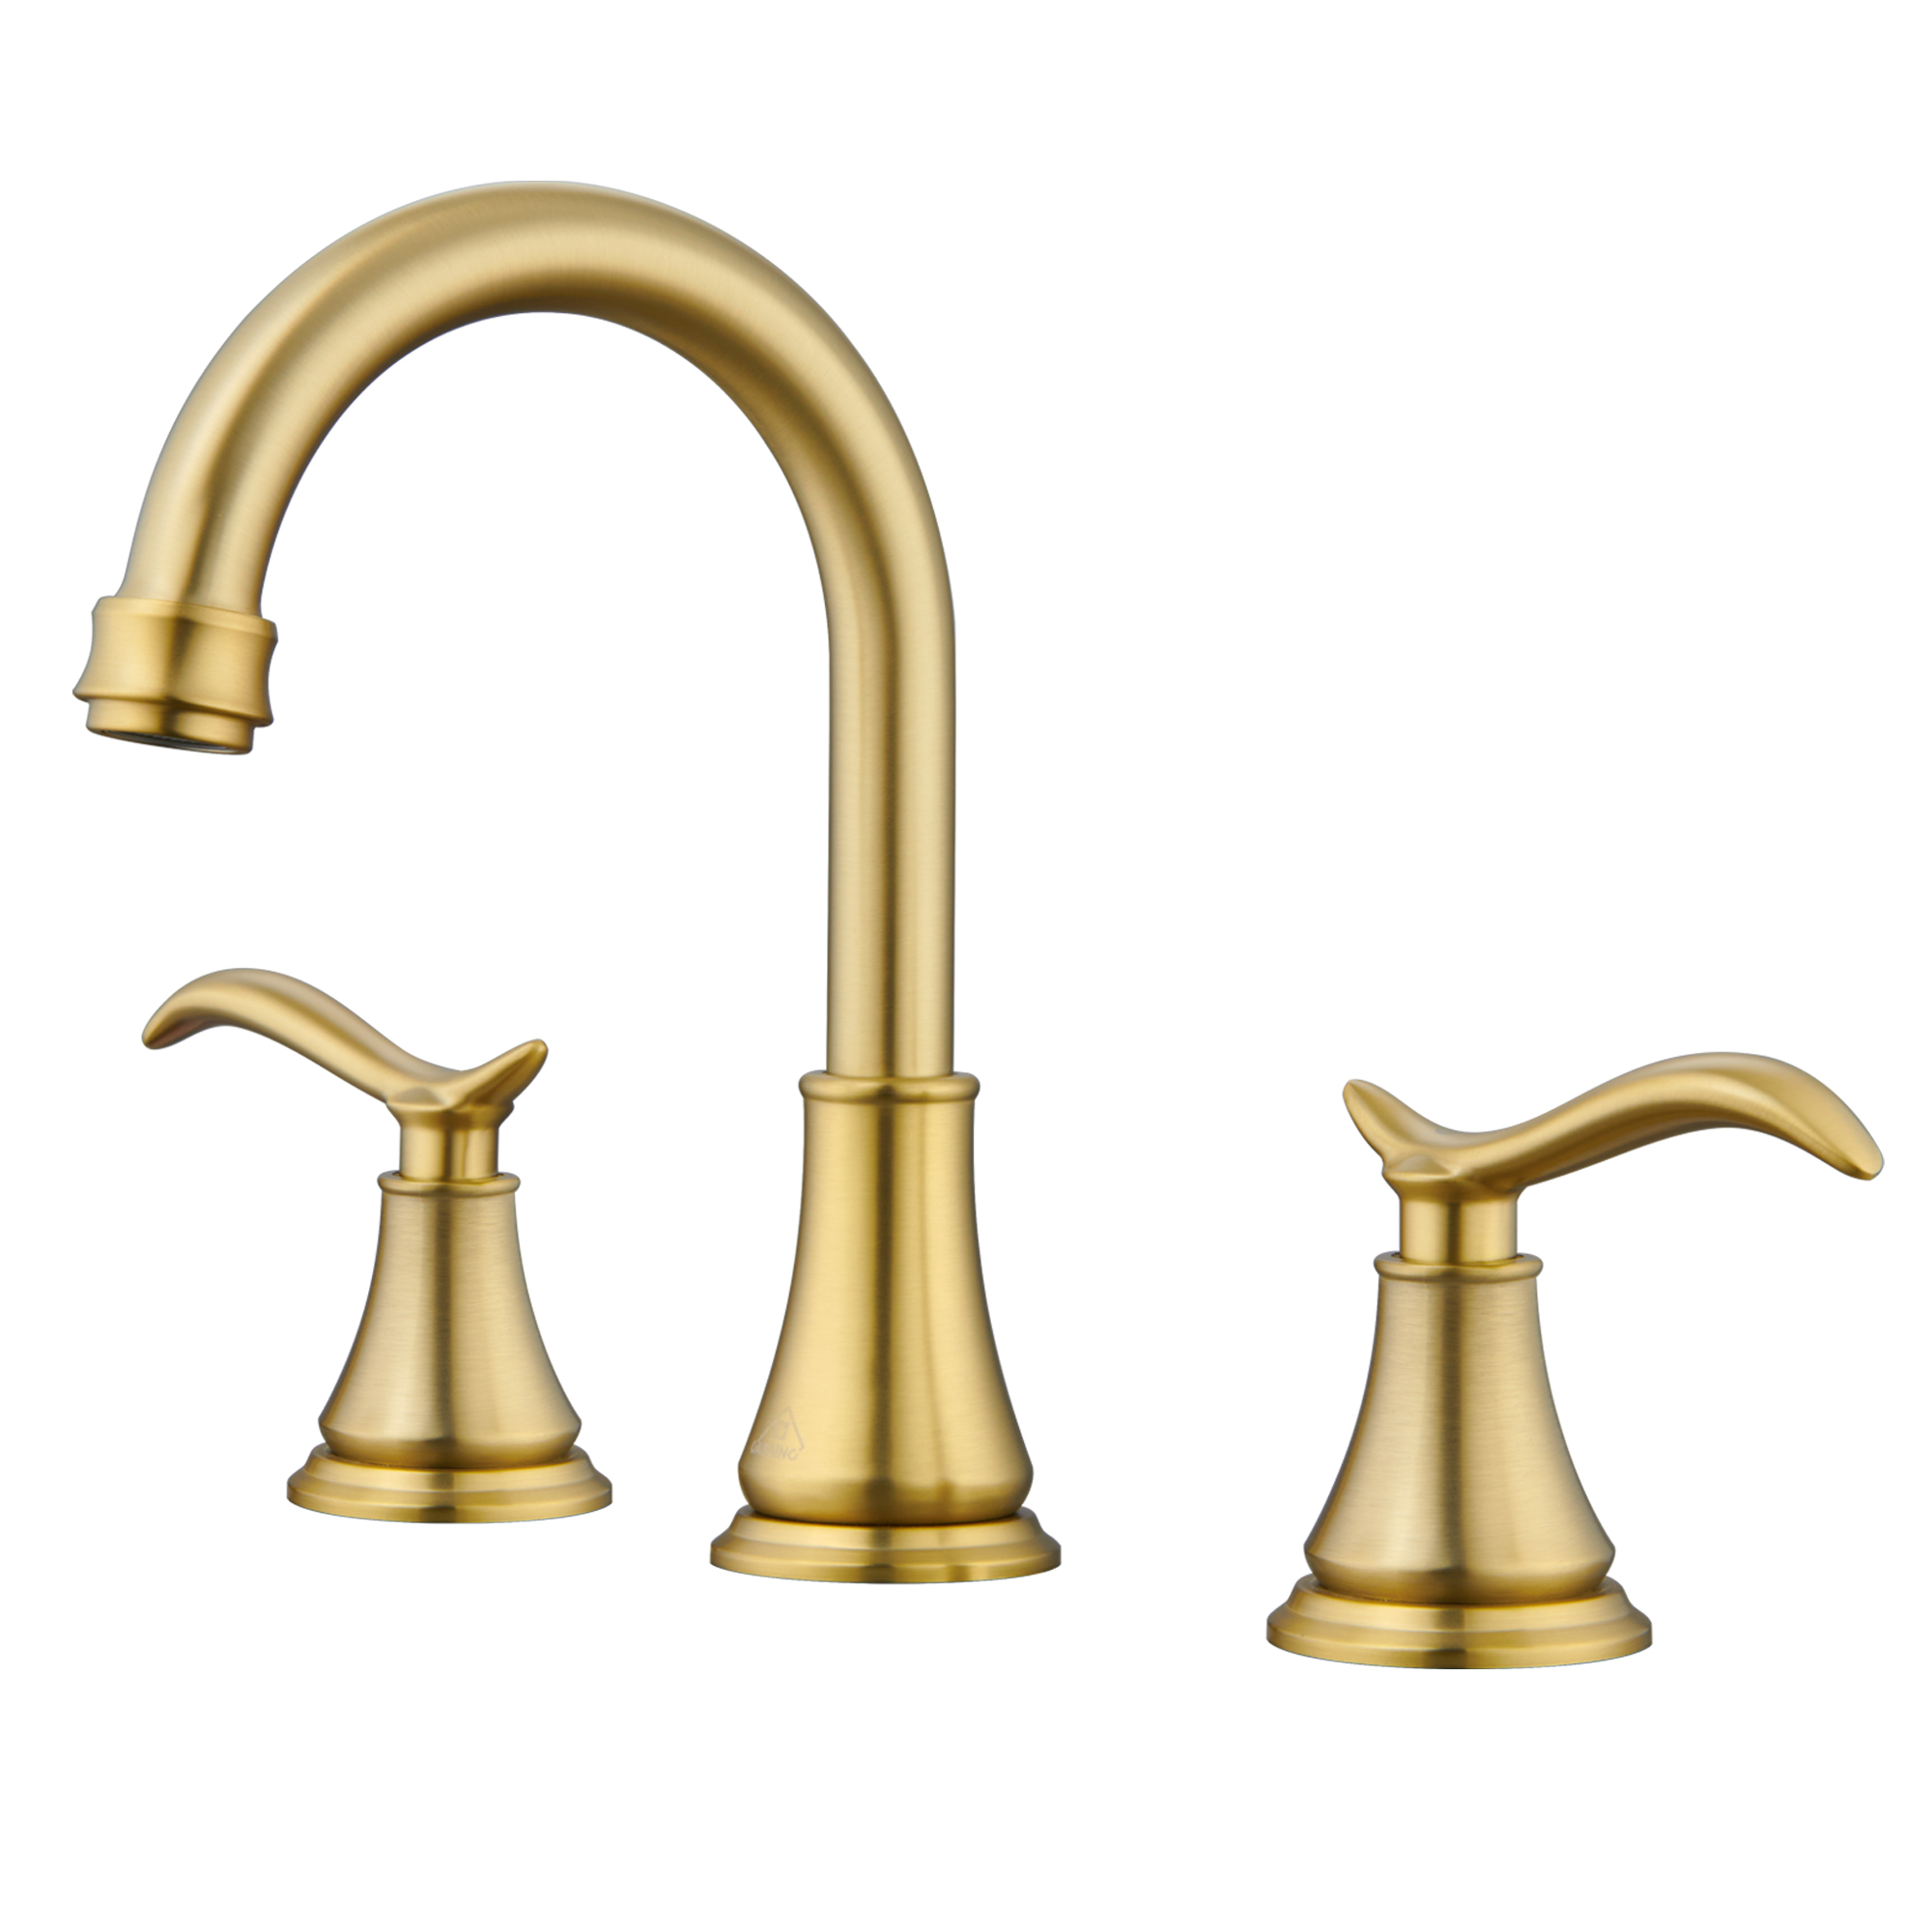 Casainc 8" Brass Bathroom Sink Faucet 2 Handle 3 Hole Gold Bathroom Faucet for Bathroom Sink with Pop-up Drain Assembly Widespread Vanity Faucets 360° Swivel Spout